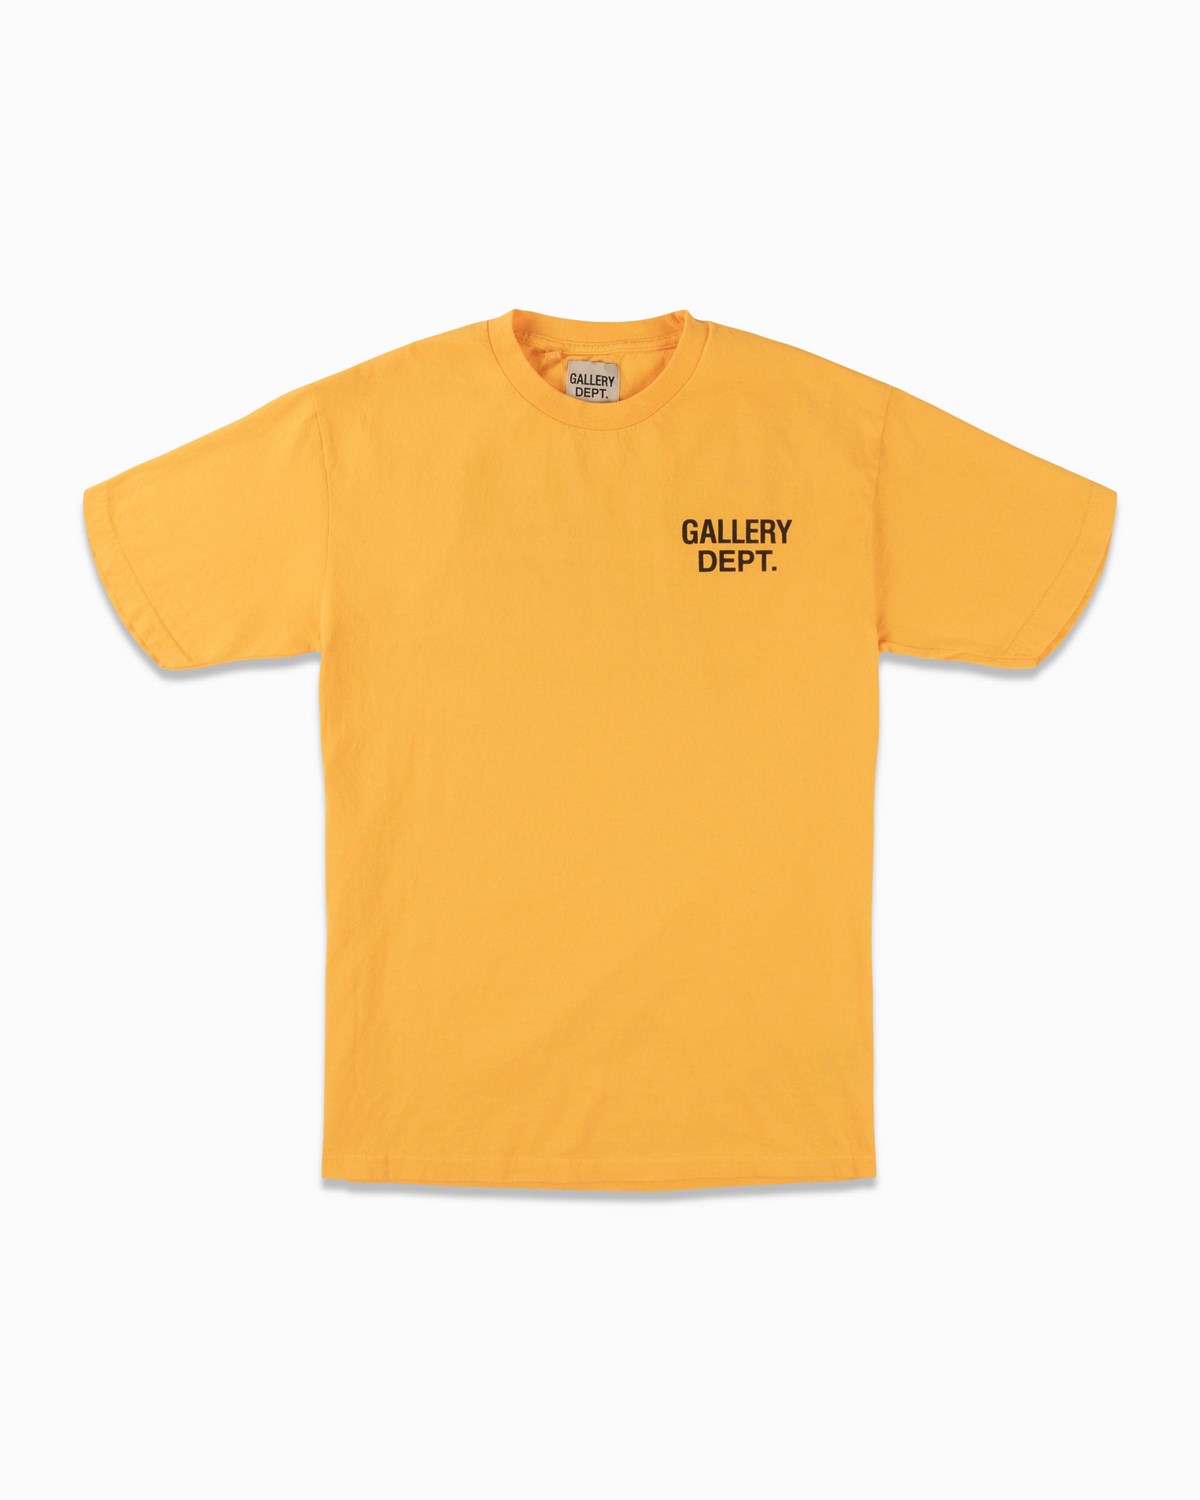 Vintage Souvenir Tee GALLERY DEPT. Tops T-Shirts Yellow